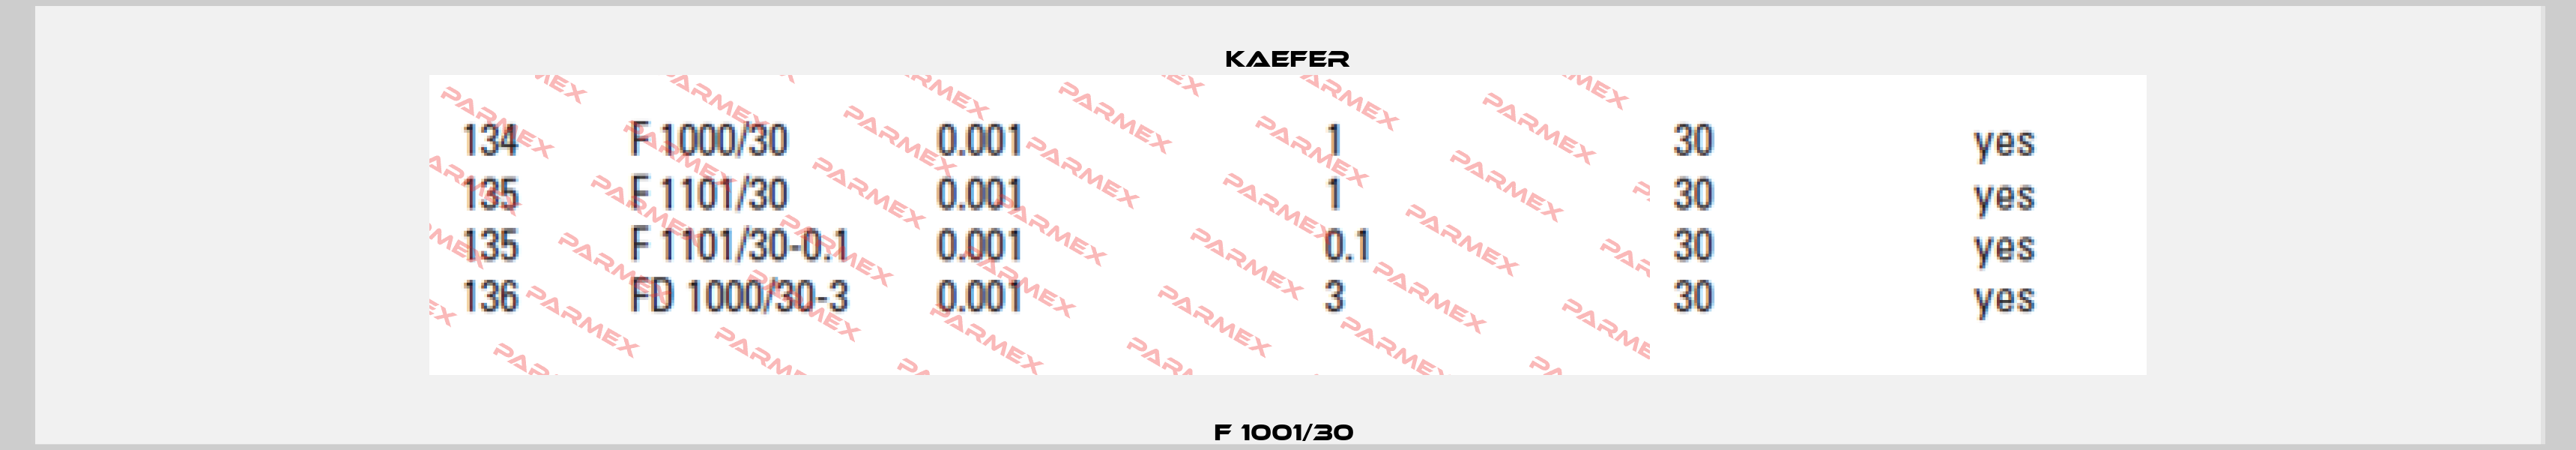 F 1001/30  Kaefer